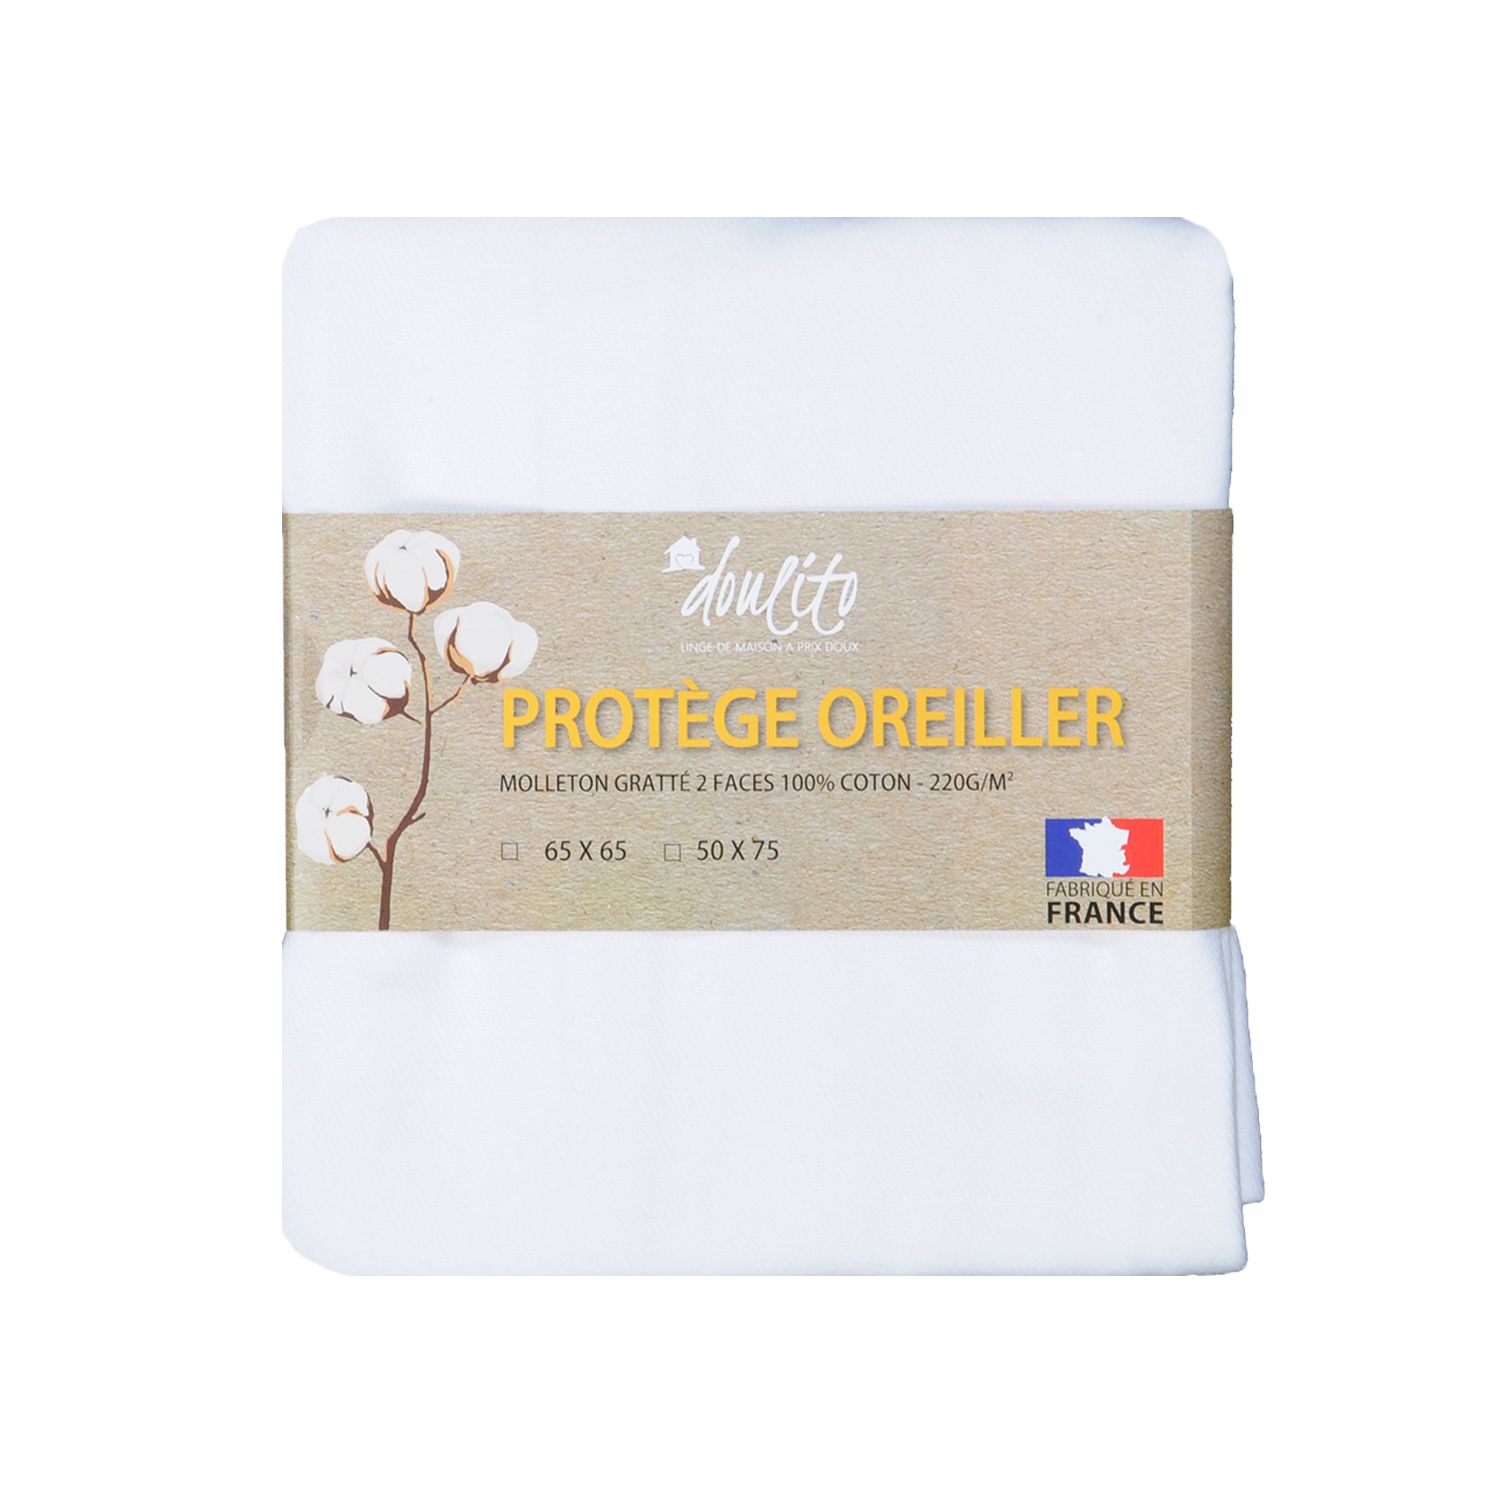 Protège oreiller Doulito - 65x65 cm - Made in France - Coton